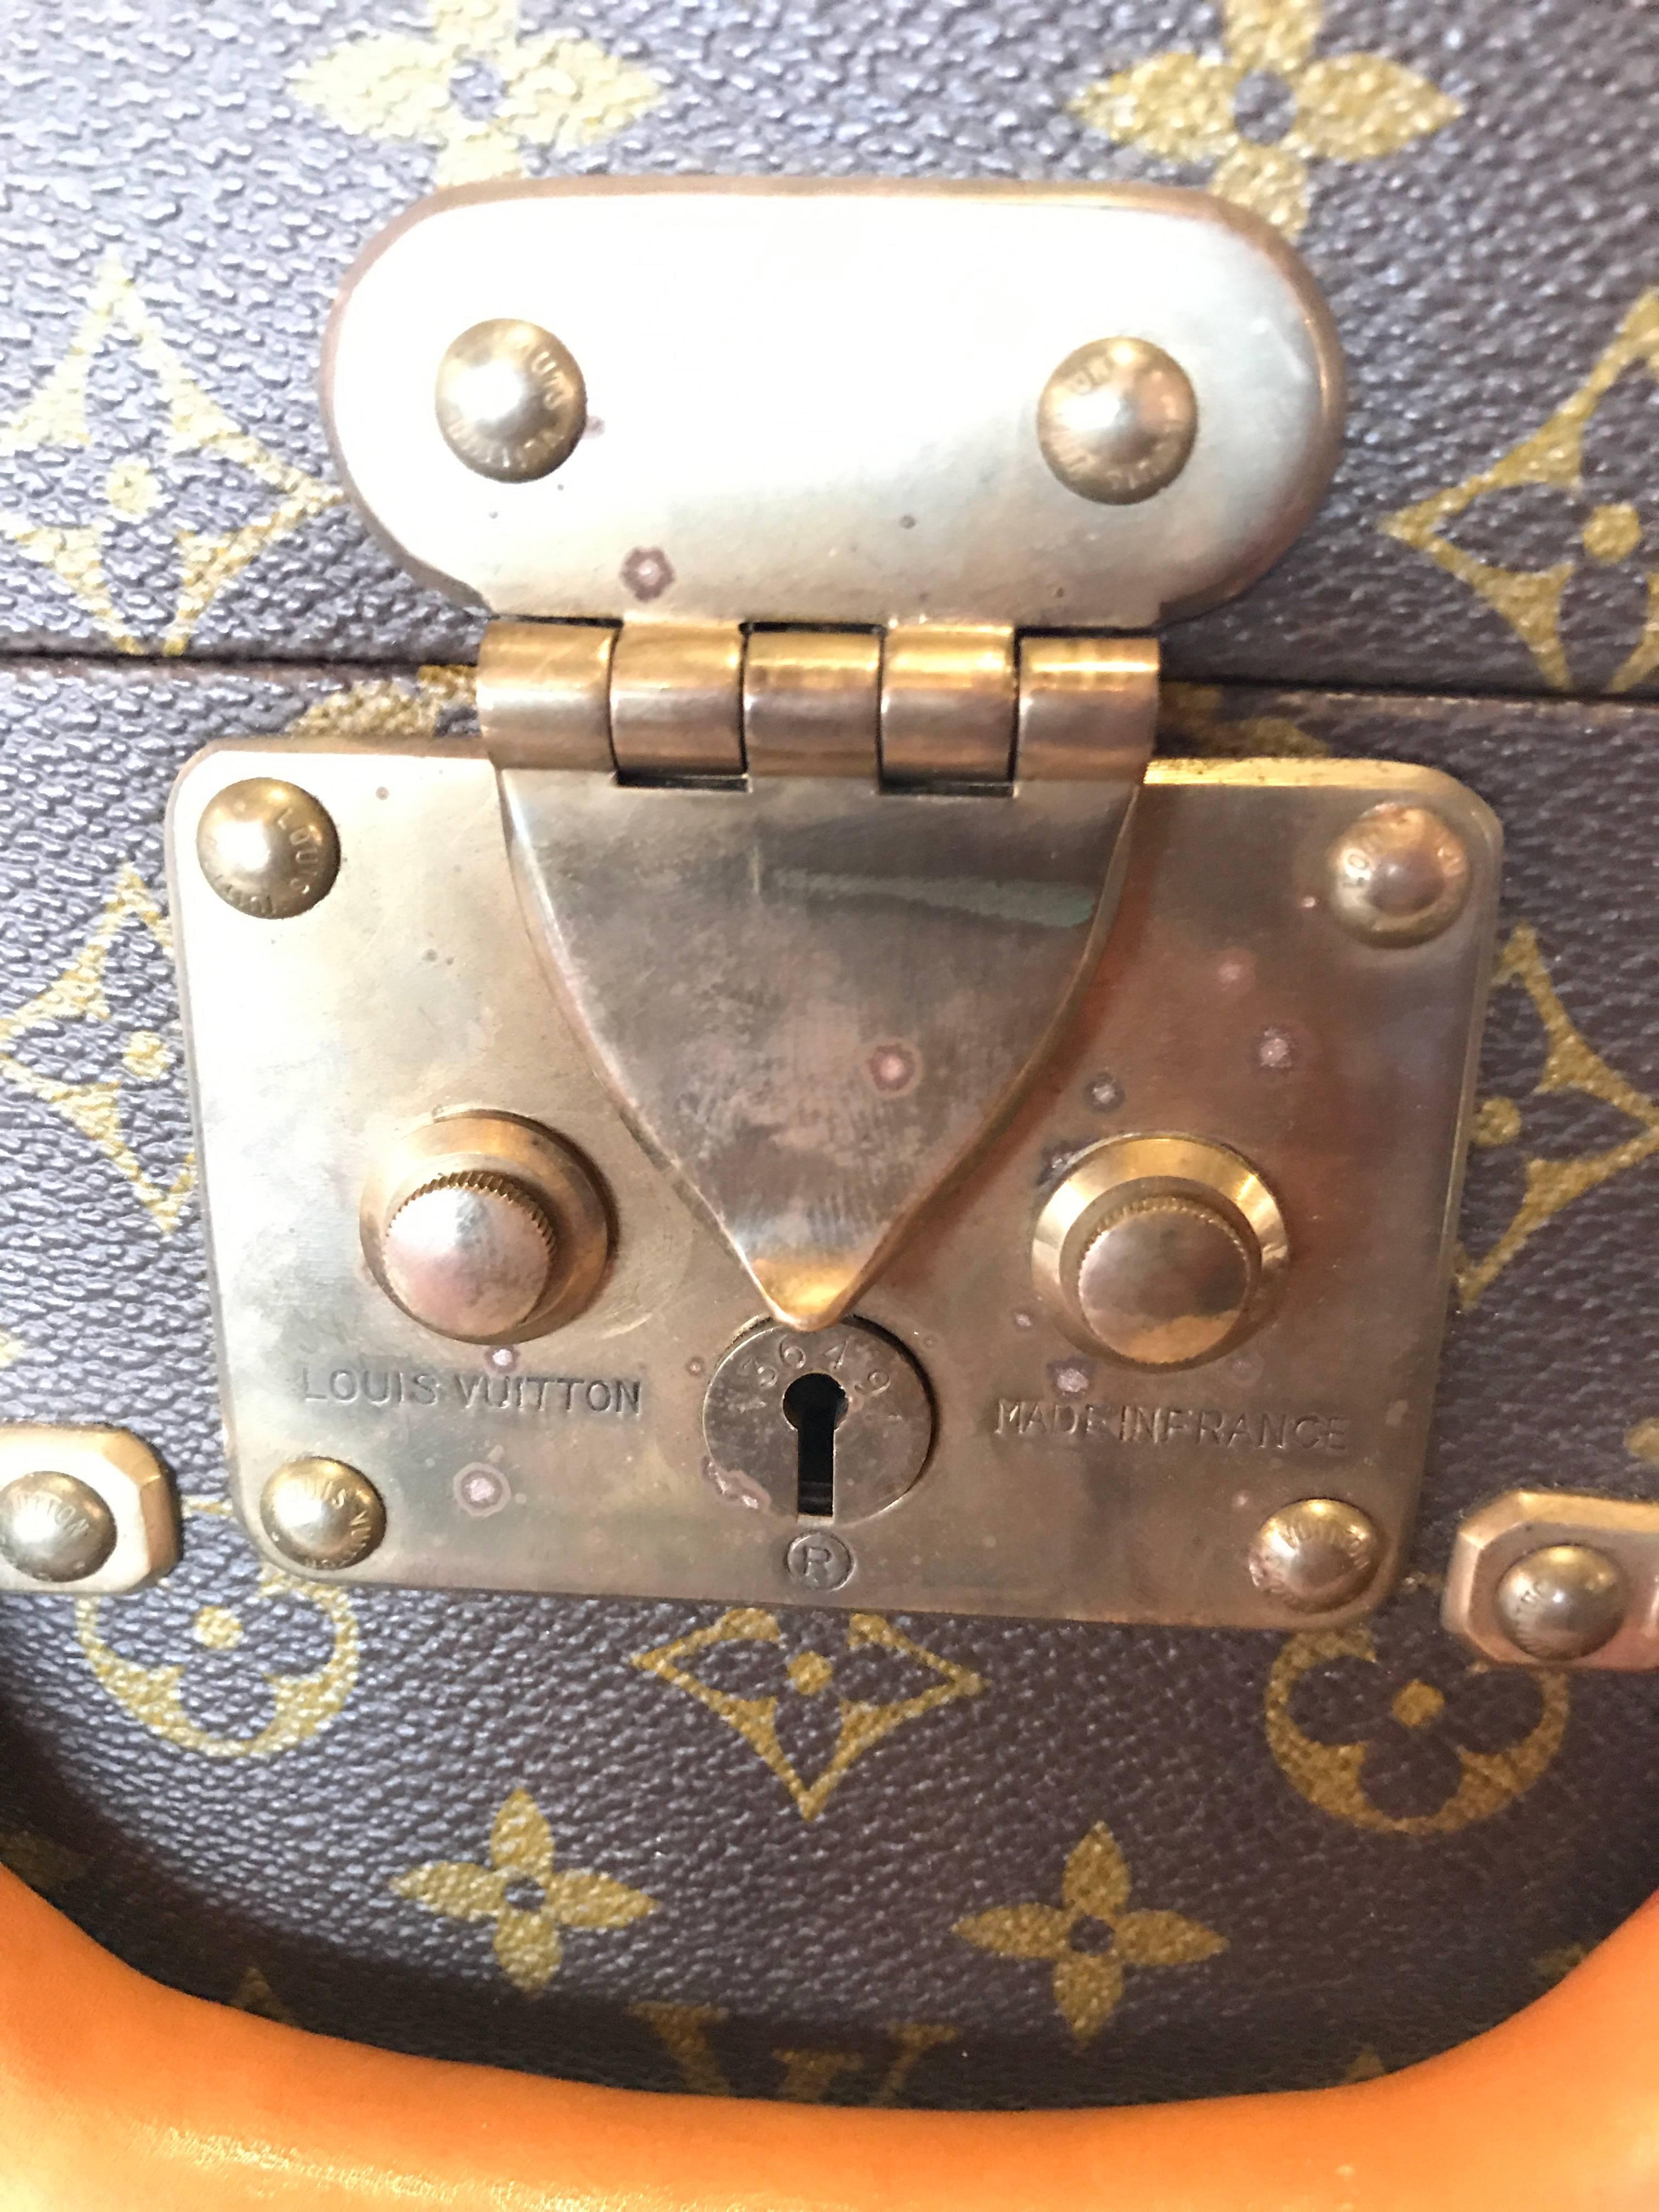 Louis Vuitton Monogram Hard Sided Suitcase. No. 912291 1